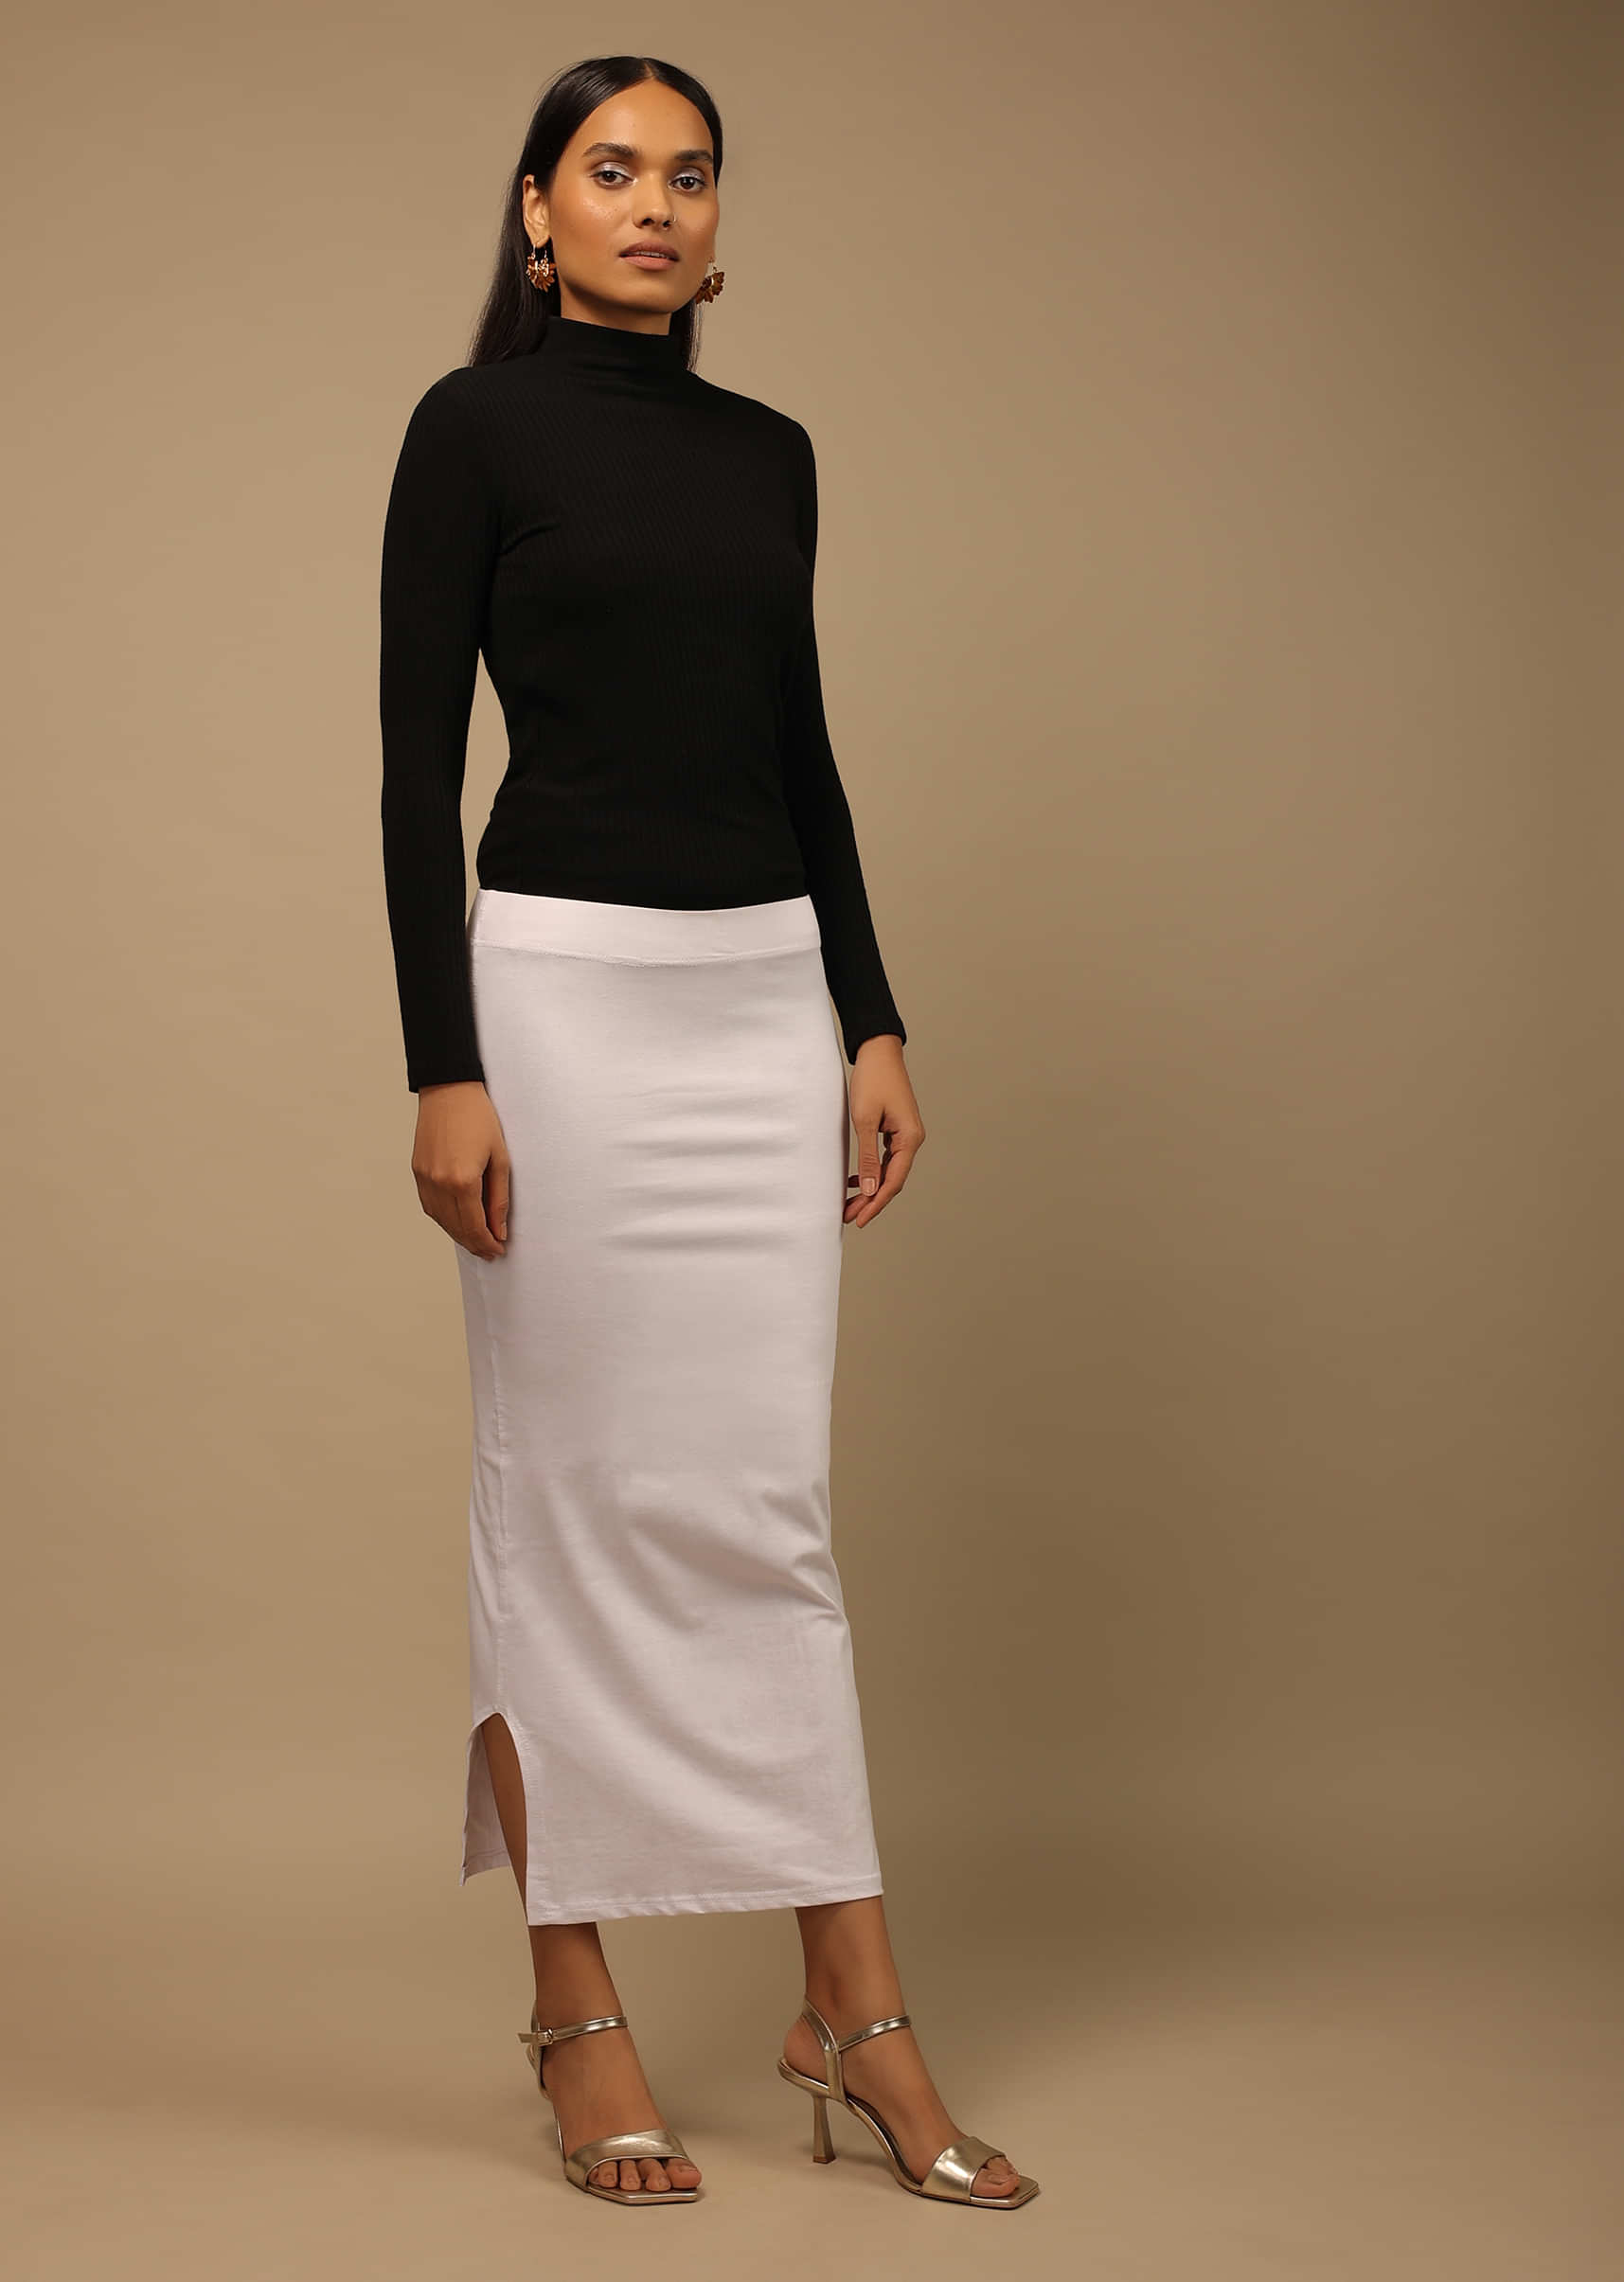 Spangel Fashion khakhi Petticote Lycra Blend Petticoat Price in